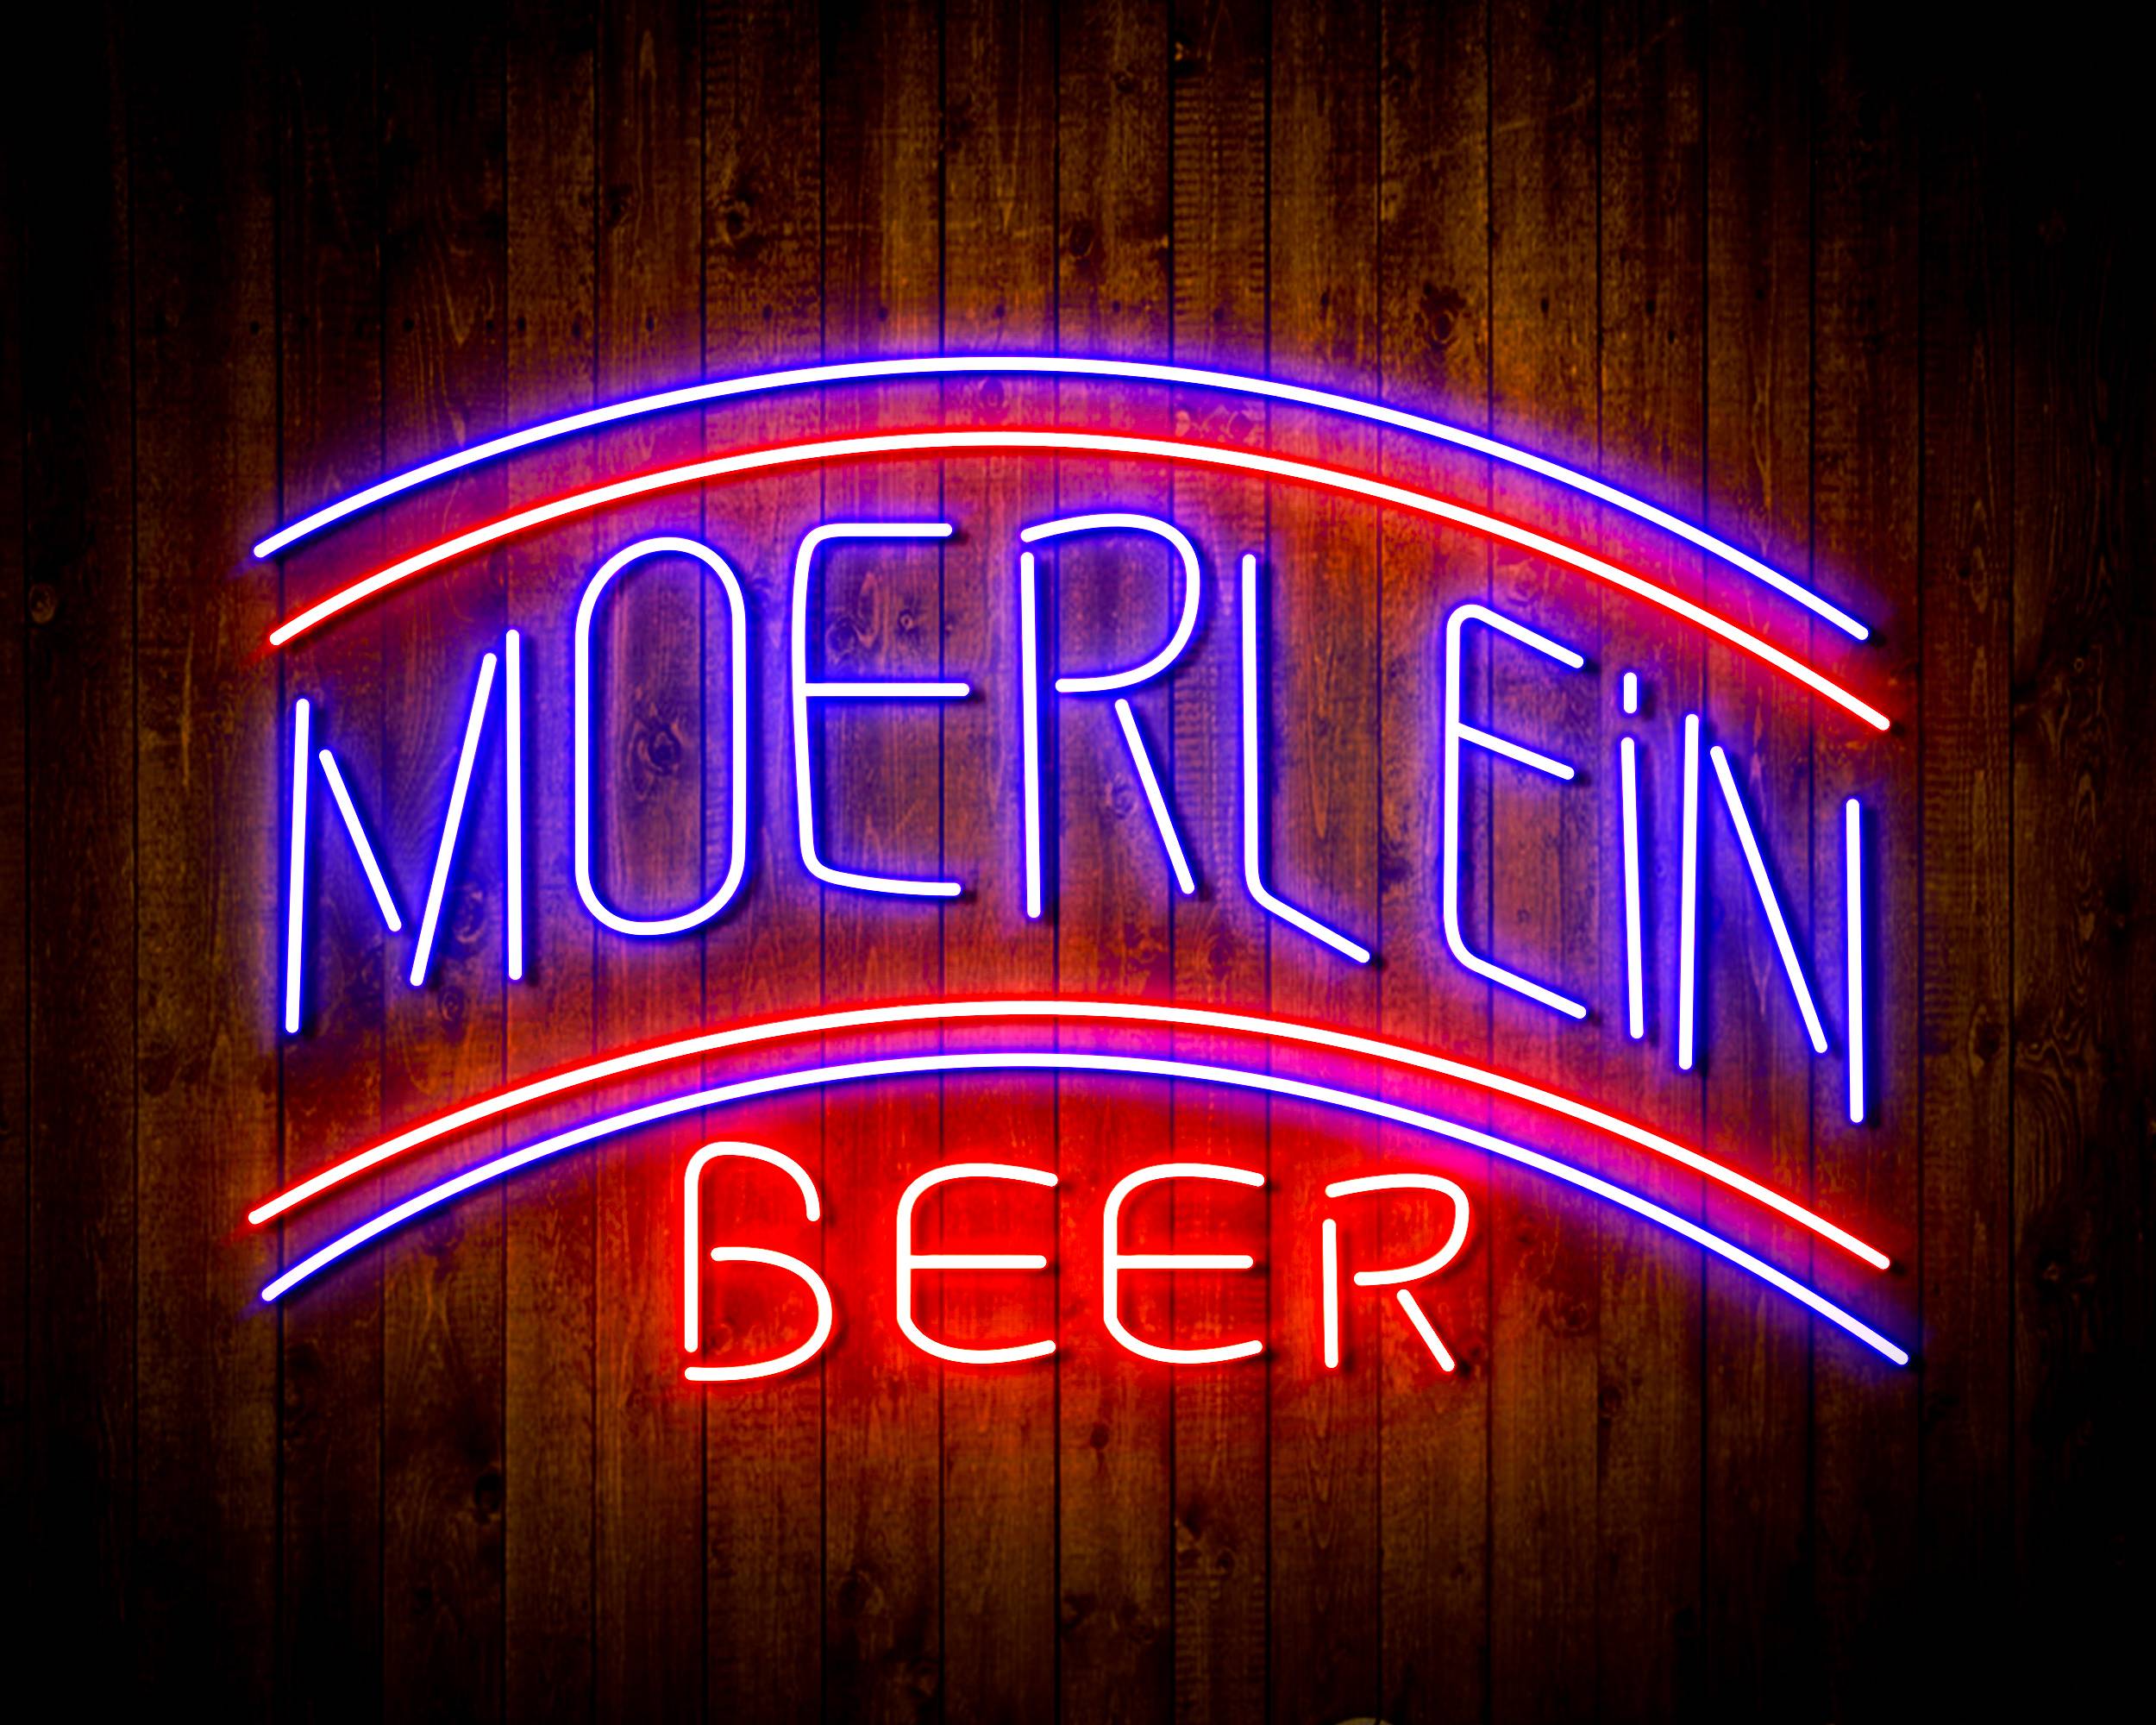 Moerlein Beer Bar Neon LED Sign